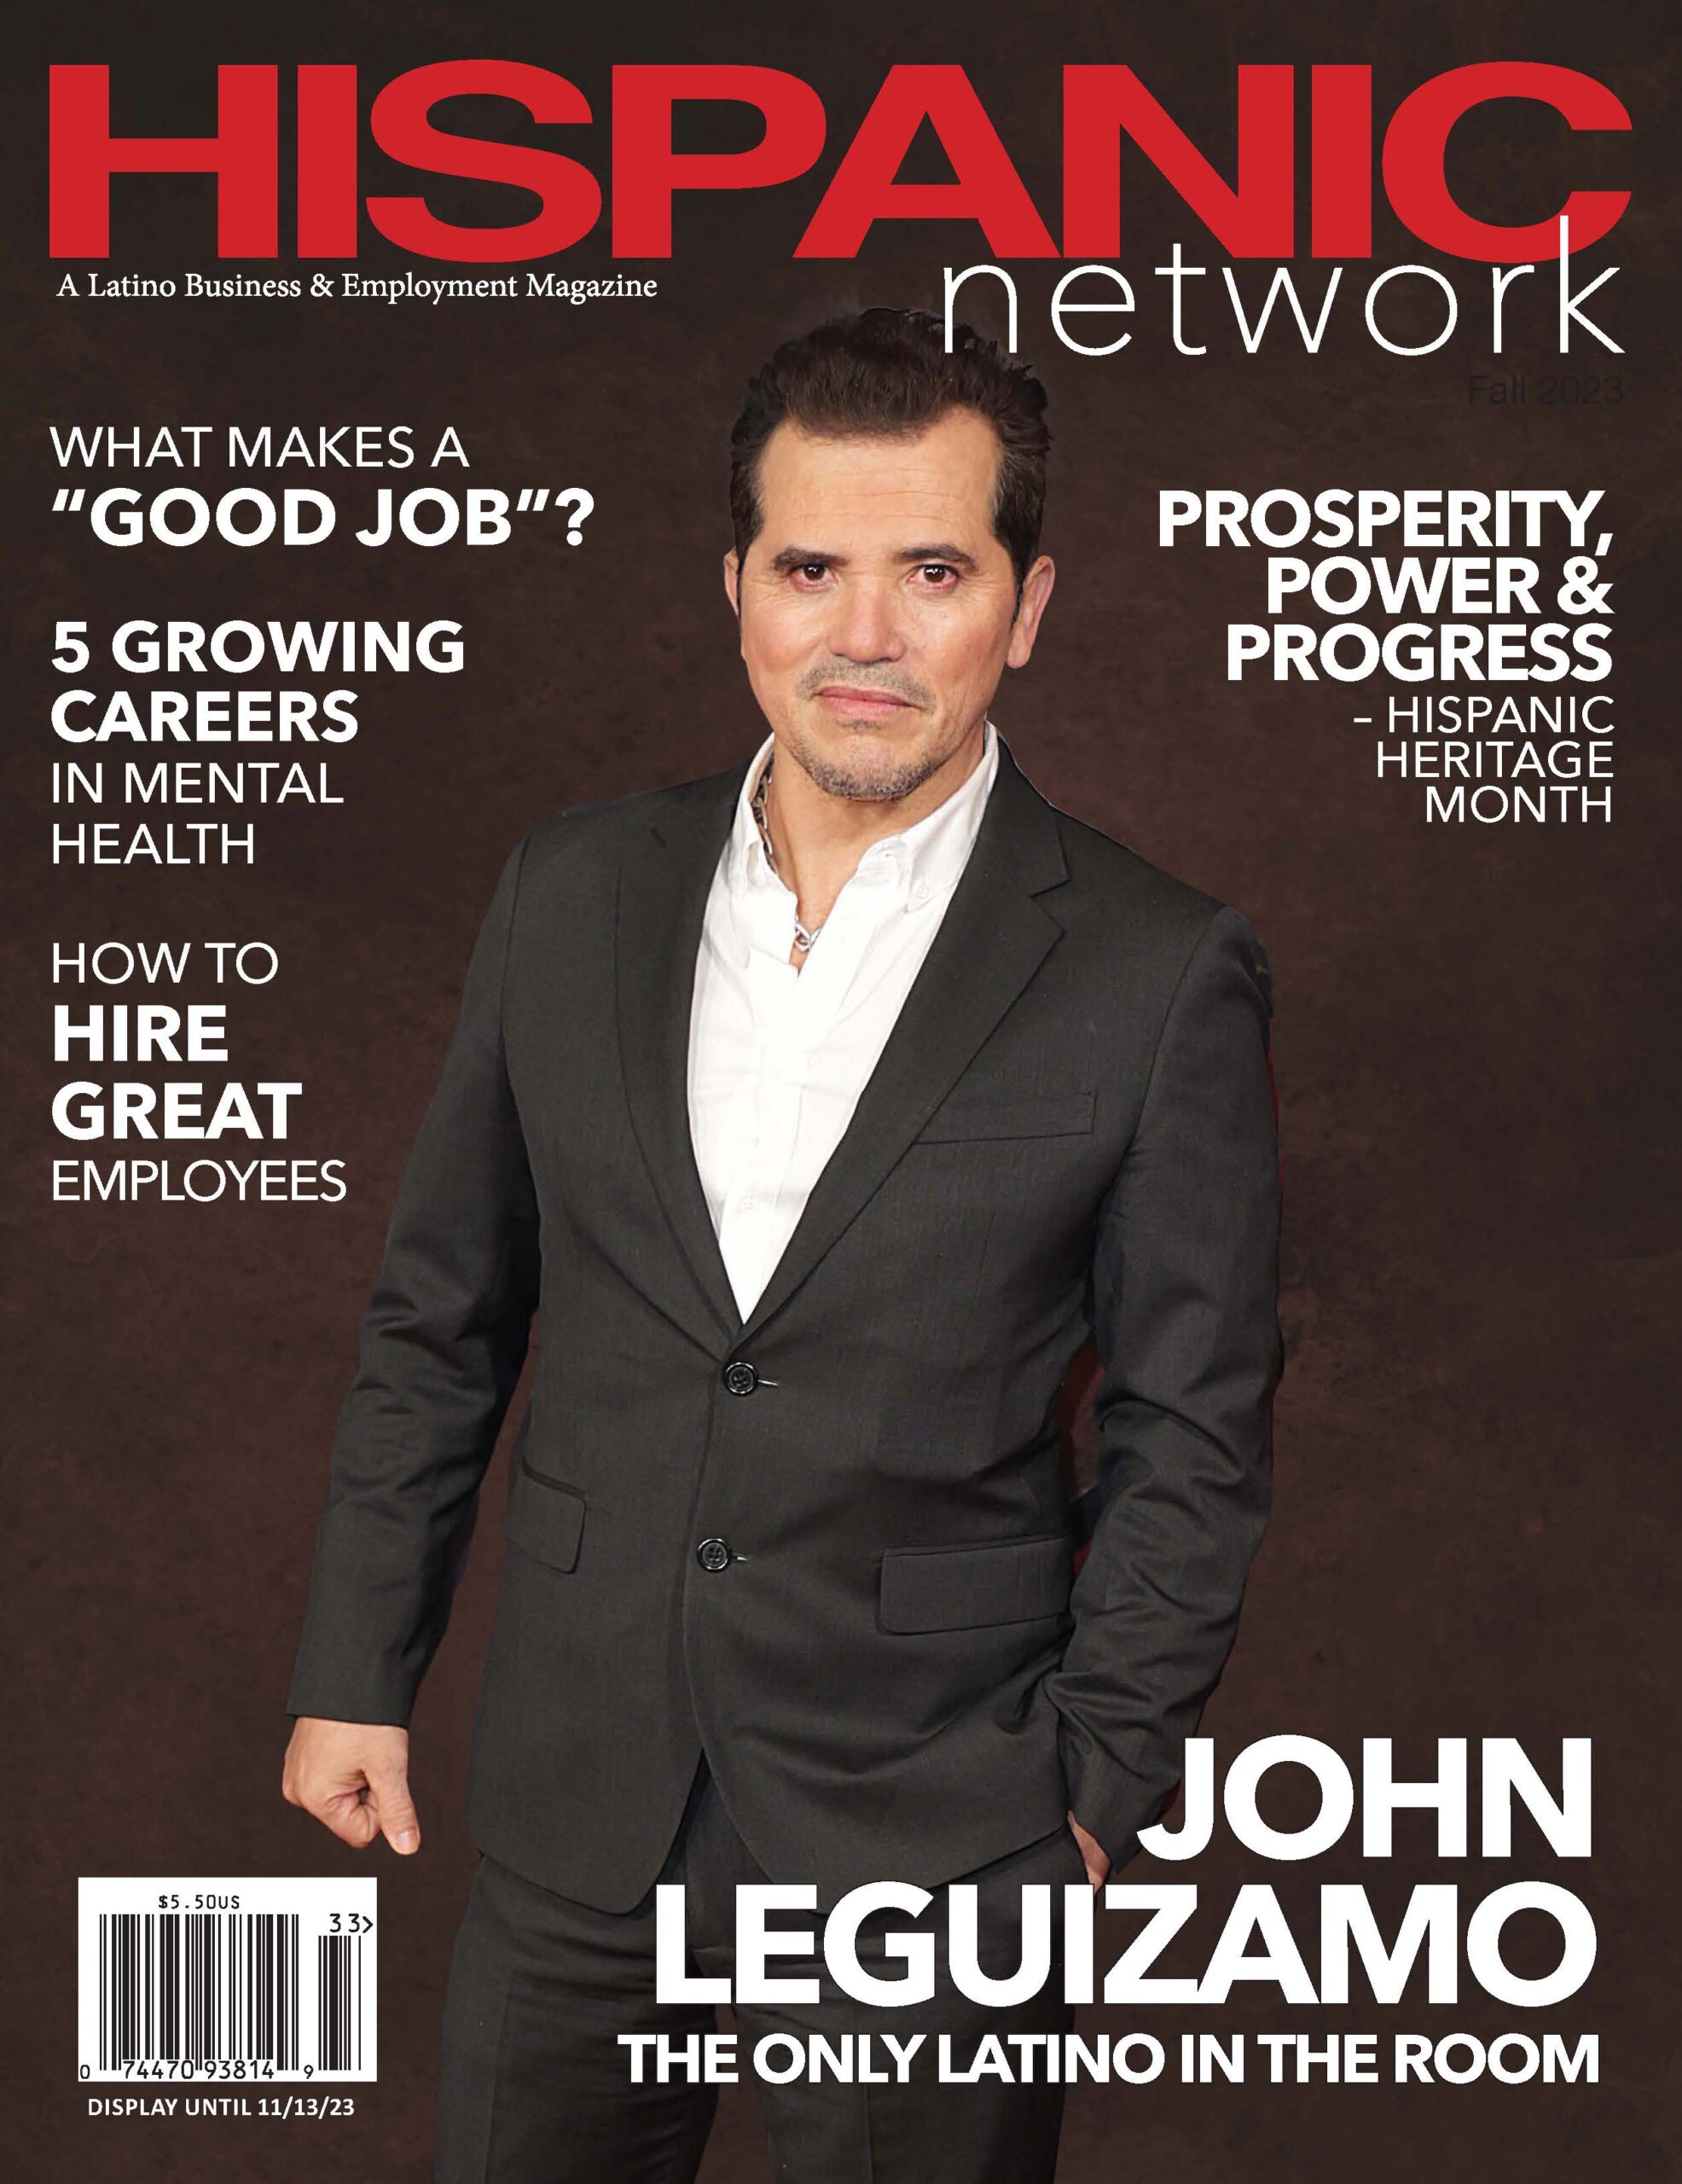 Try Our Digital Magazine, Hispanic Network